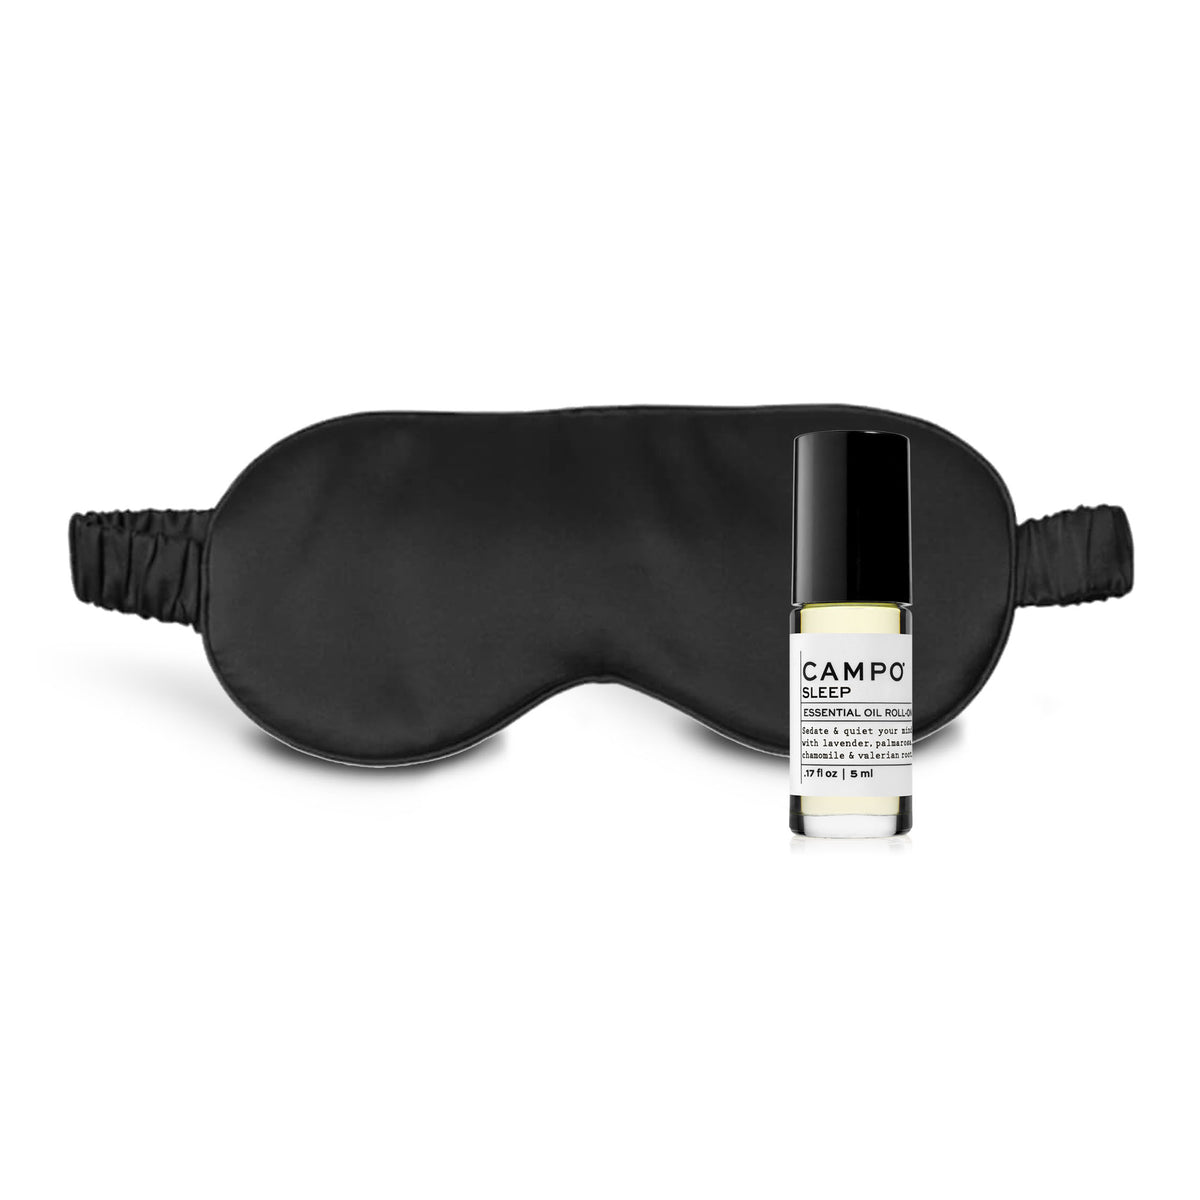 Campo Beauty Sleep Essential Oil Roll-on + Black Silk Sleep Mask. 